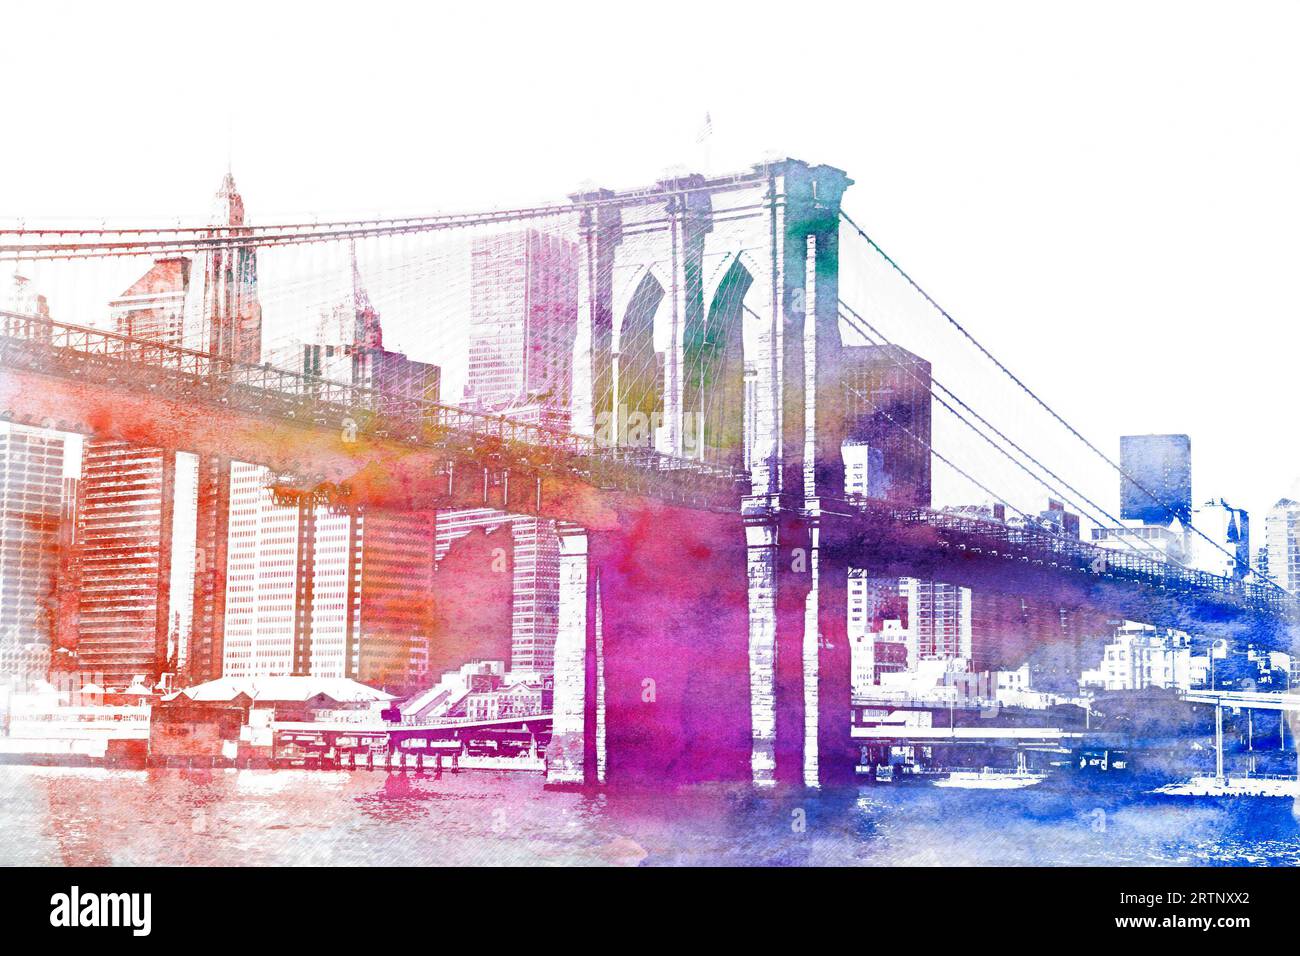 Illustration of the Brooklyn Bridge along the East River, New York City. Stock Photo